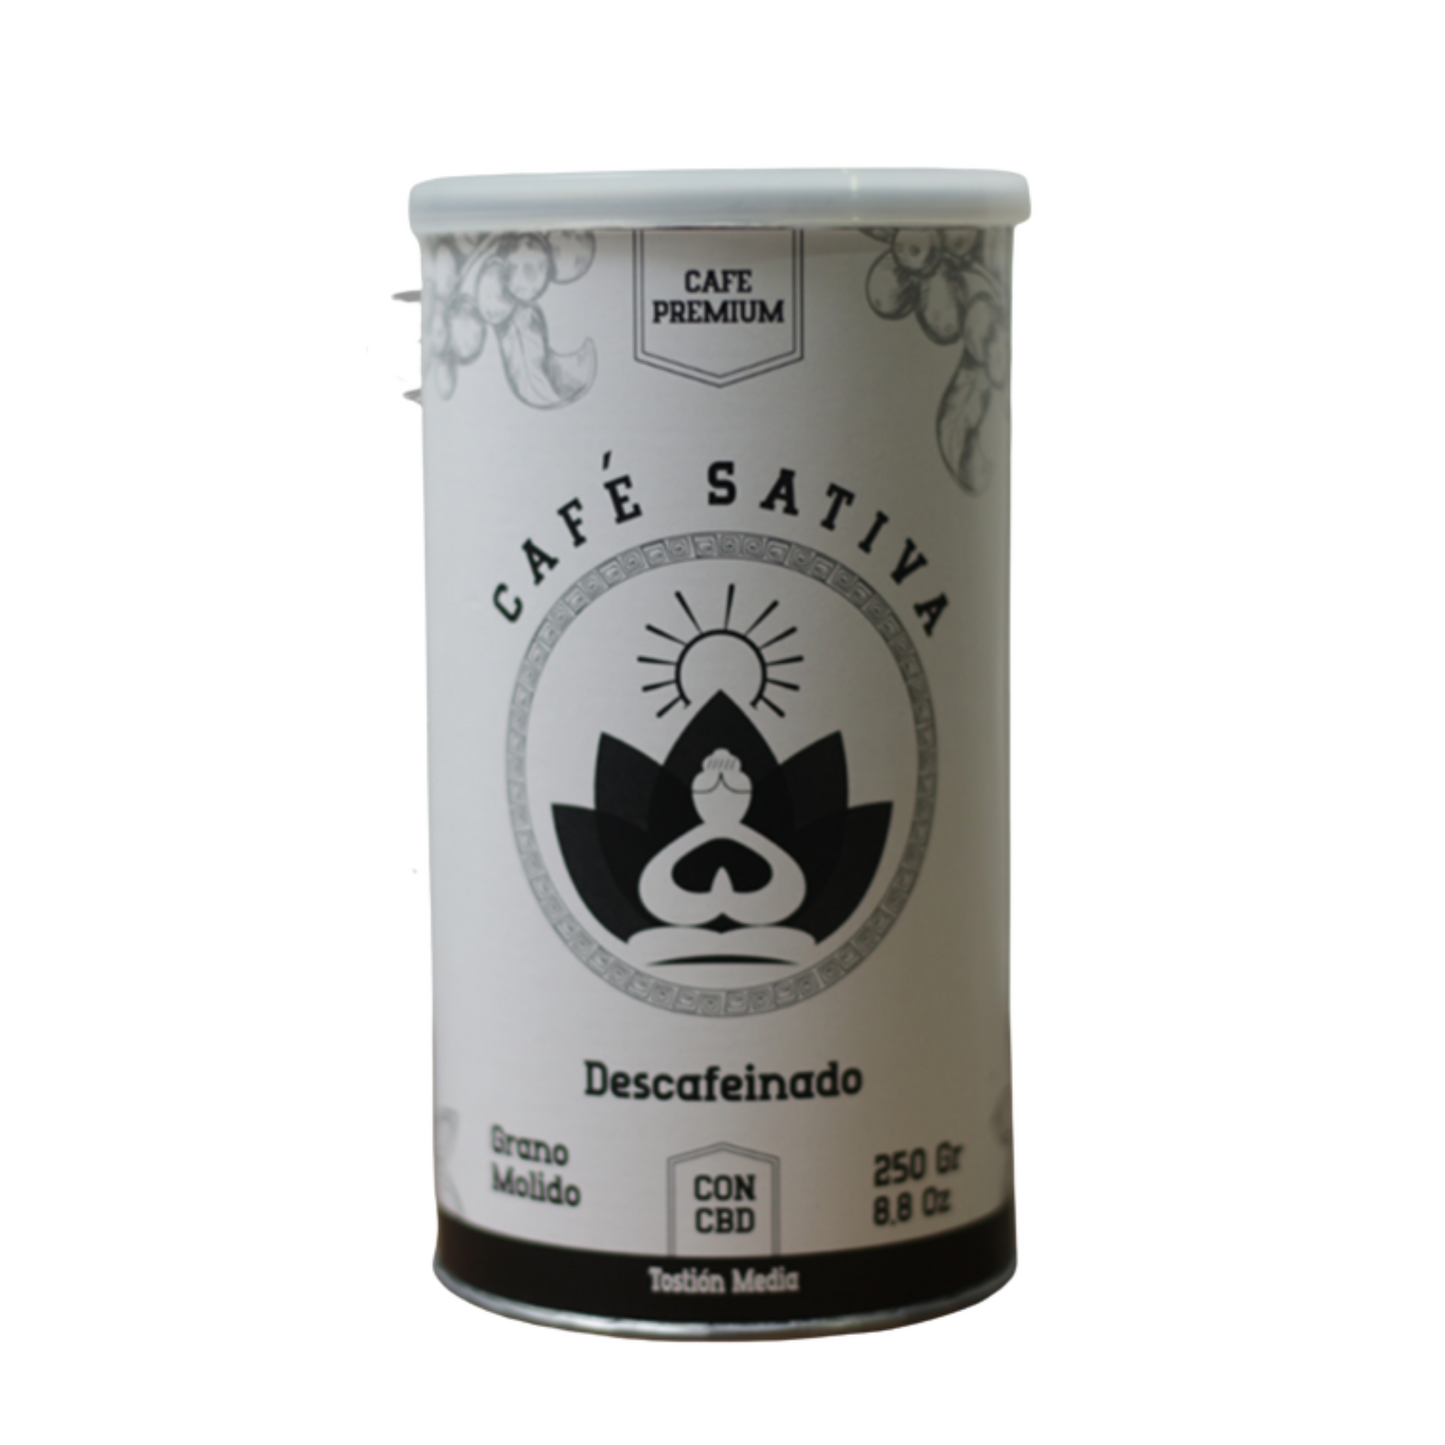 Decaffeinated Sativa Single-origin Organic coffee with CBD 250g